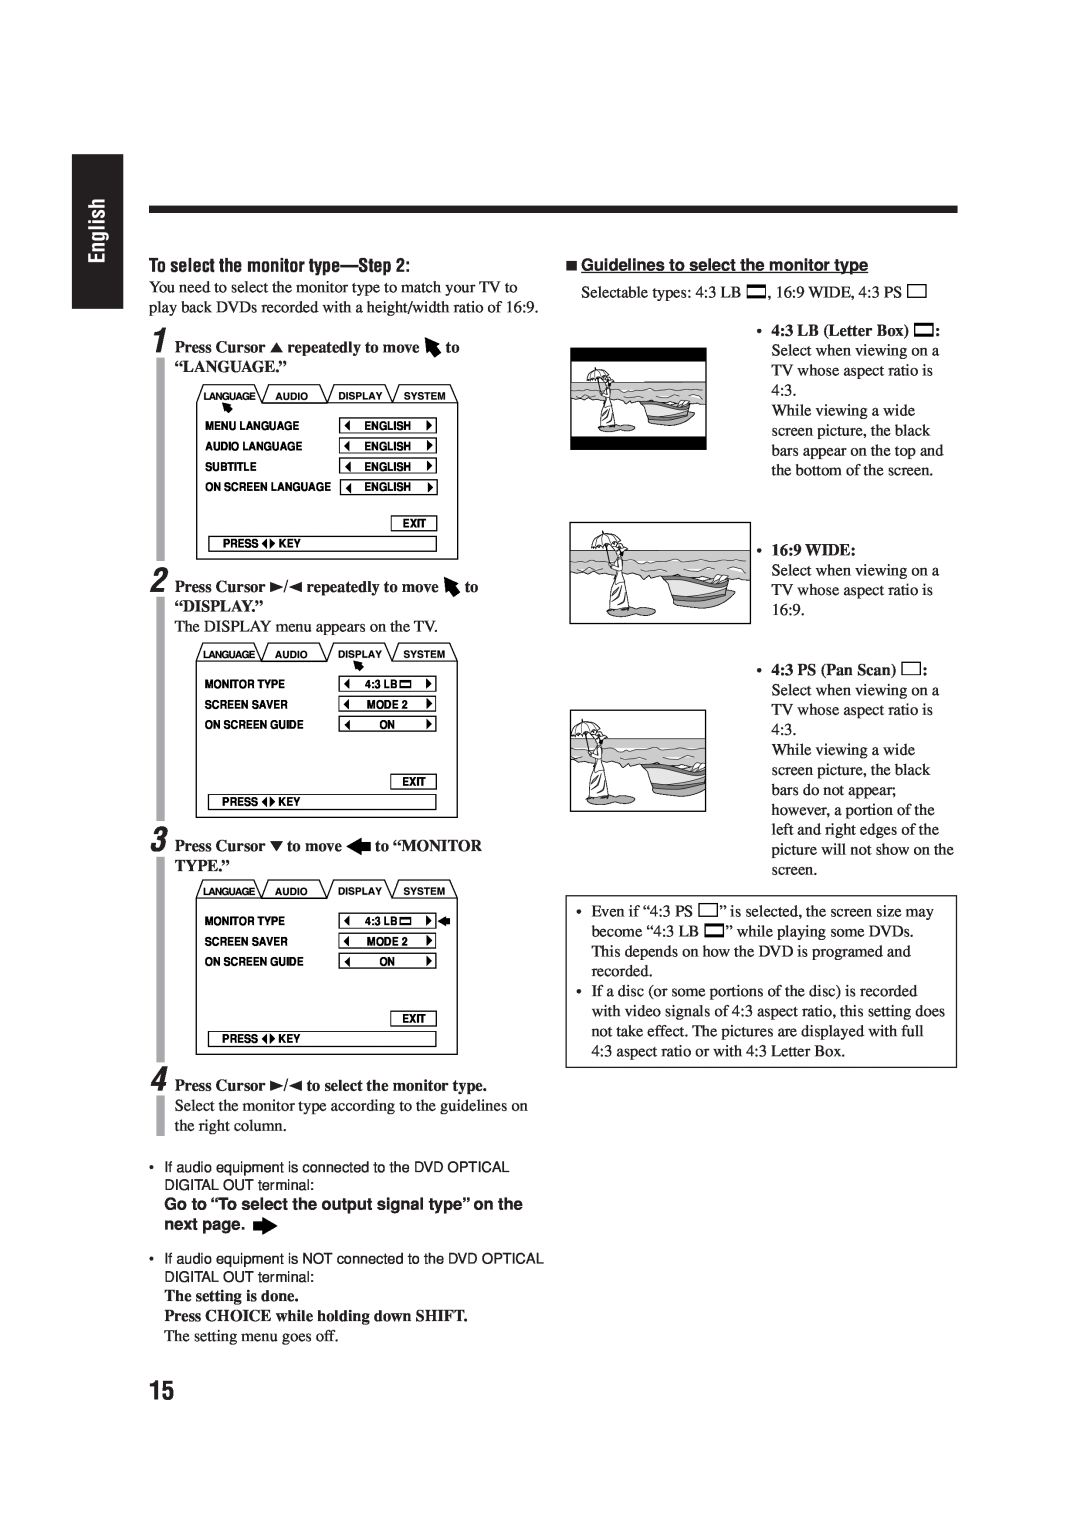 JVC LVT0954-007A manual English, To select the monitor type, 7Guidelines to select the monitor type 